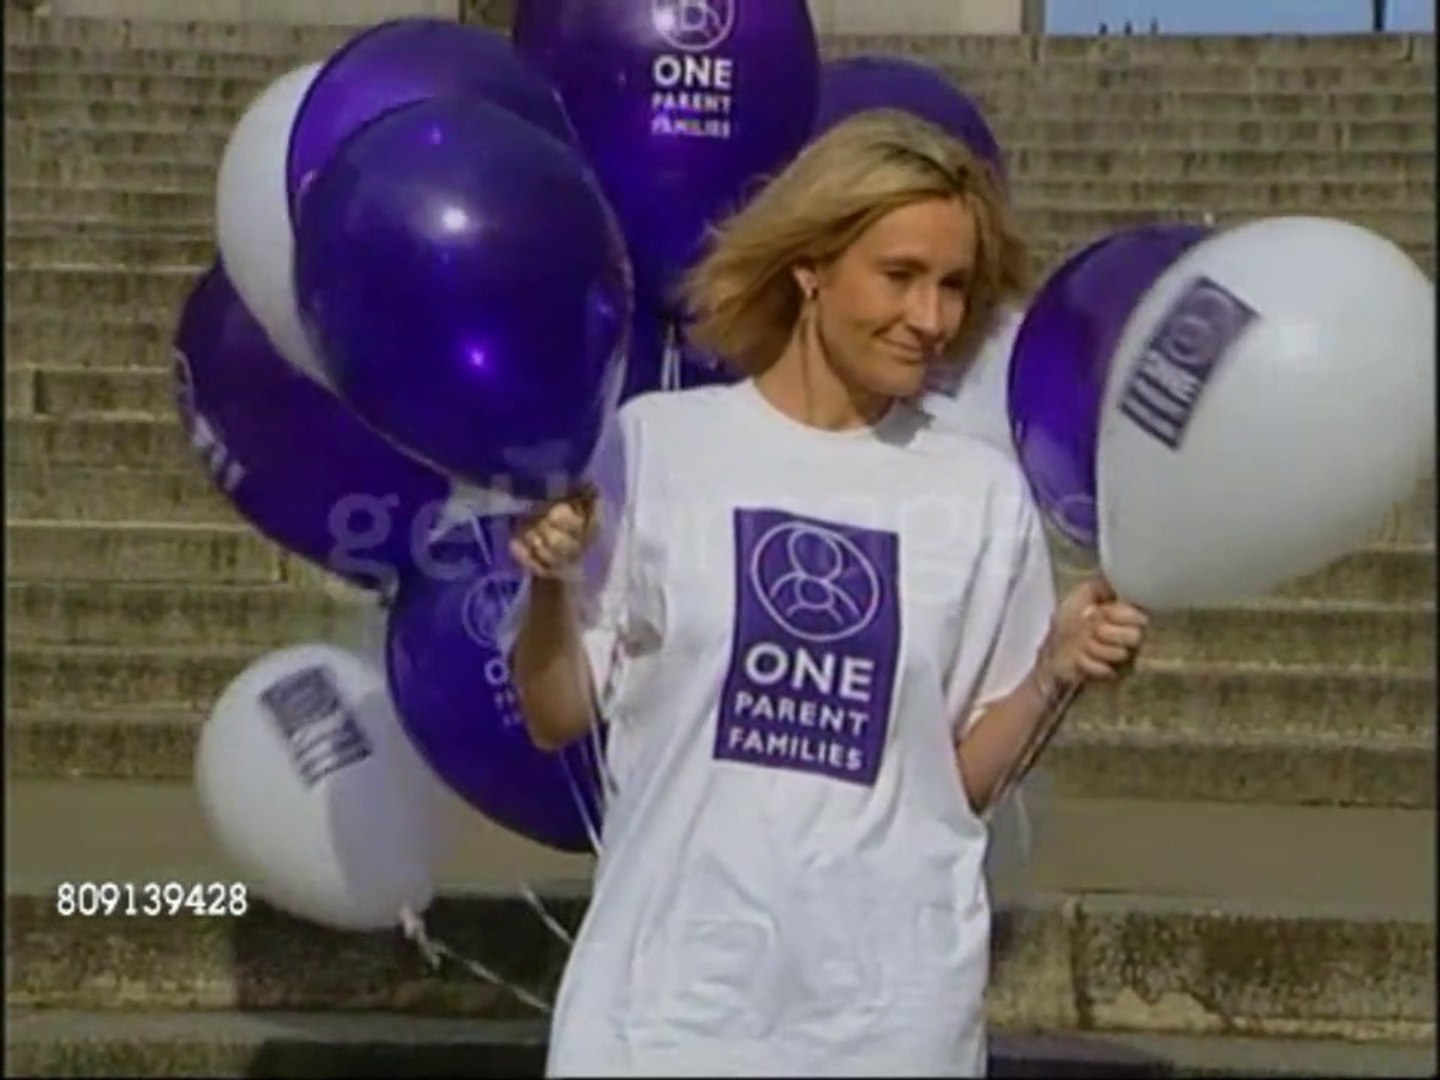 ⁣J.K. Rowling donates money to single parents family charity (04/10/2000)